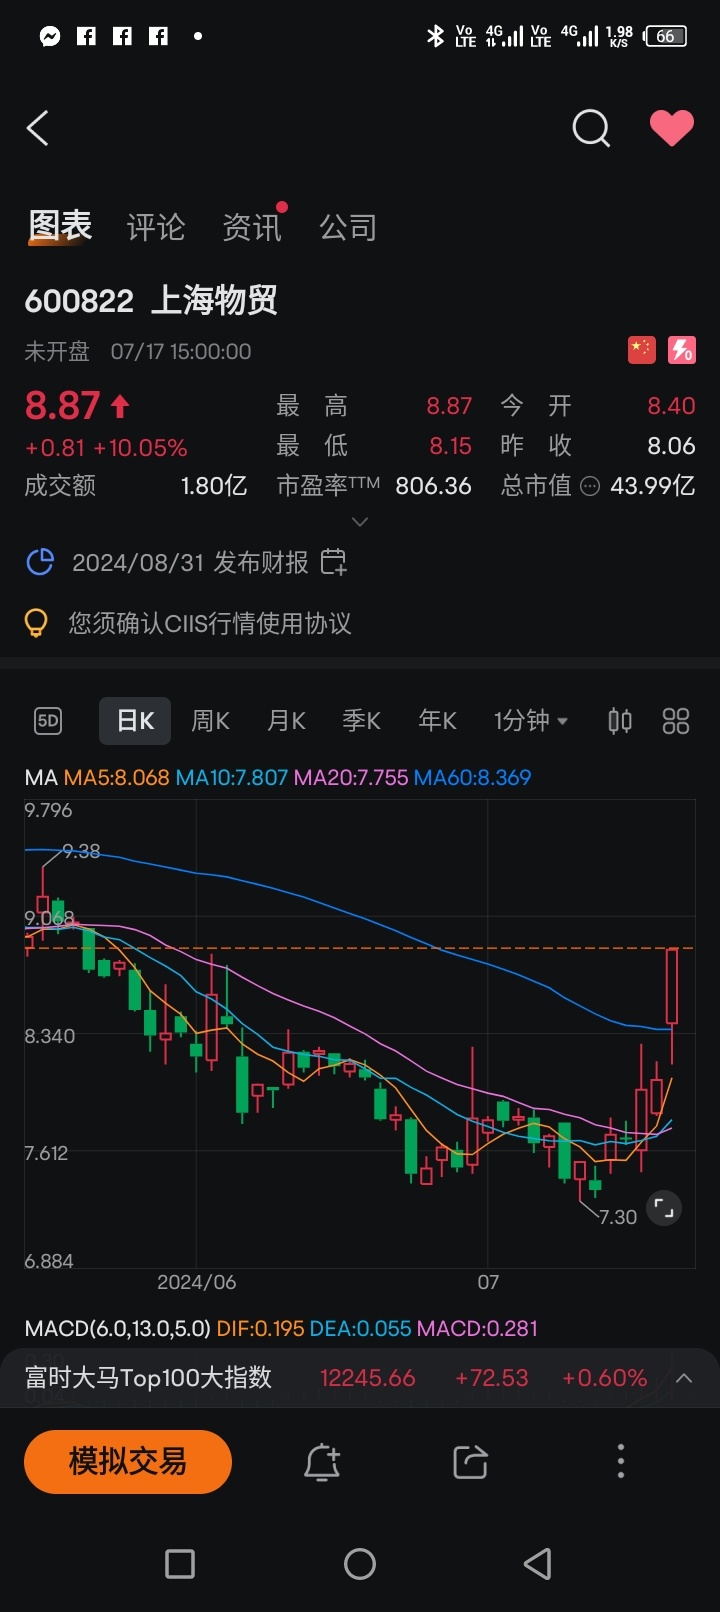 $Shanghai Material Trading (600822.SH)$ Eat meat